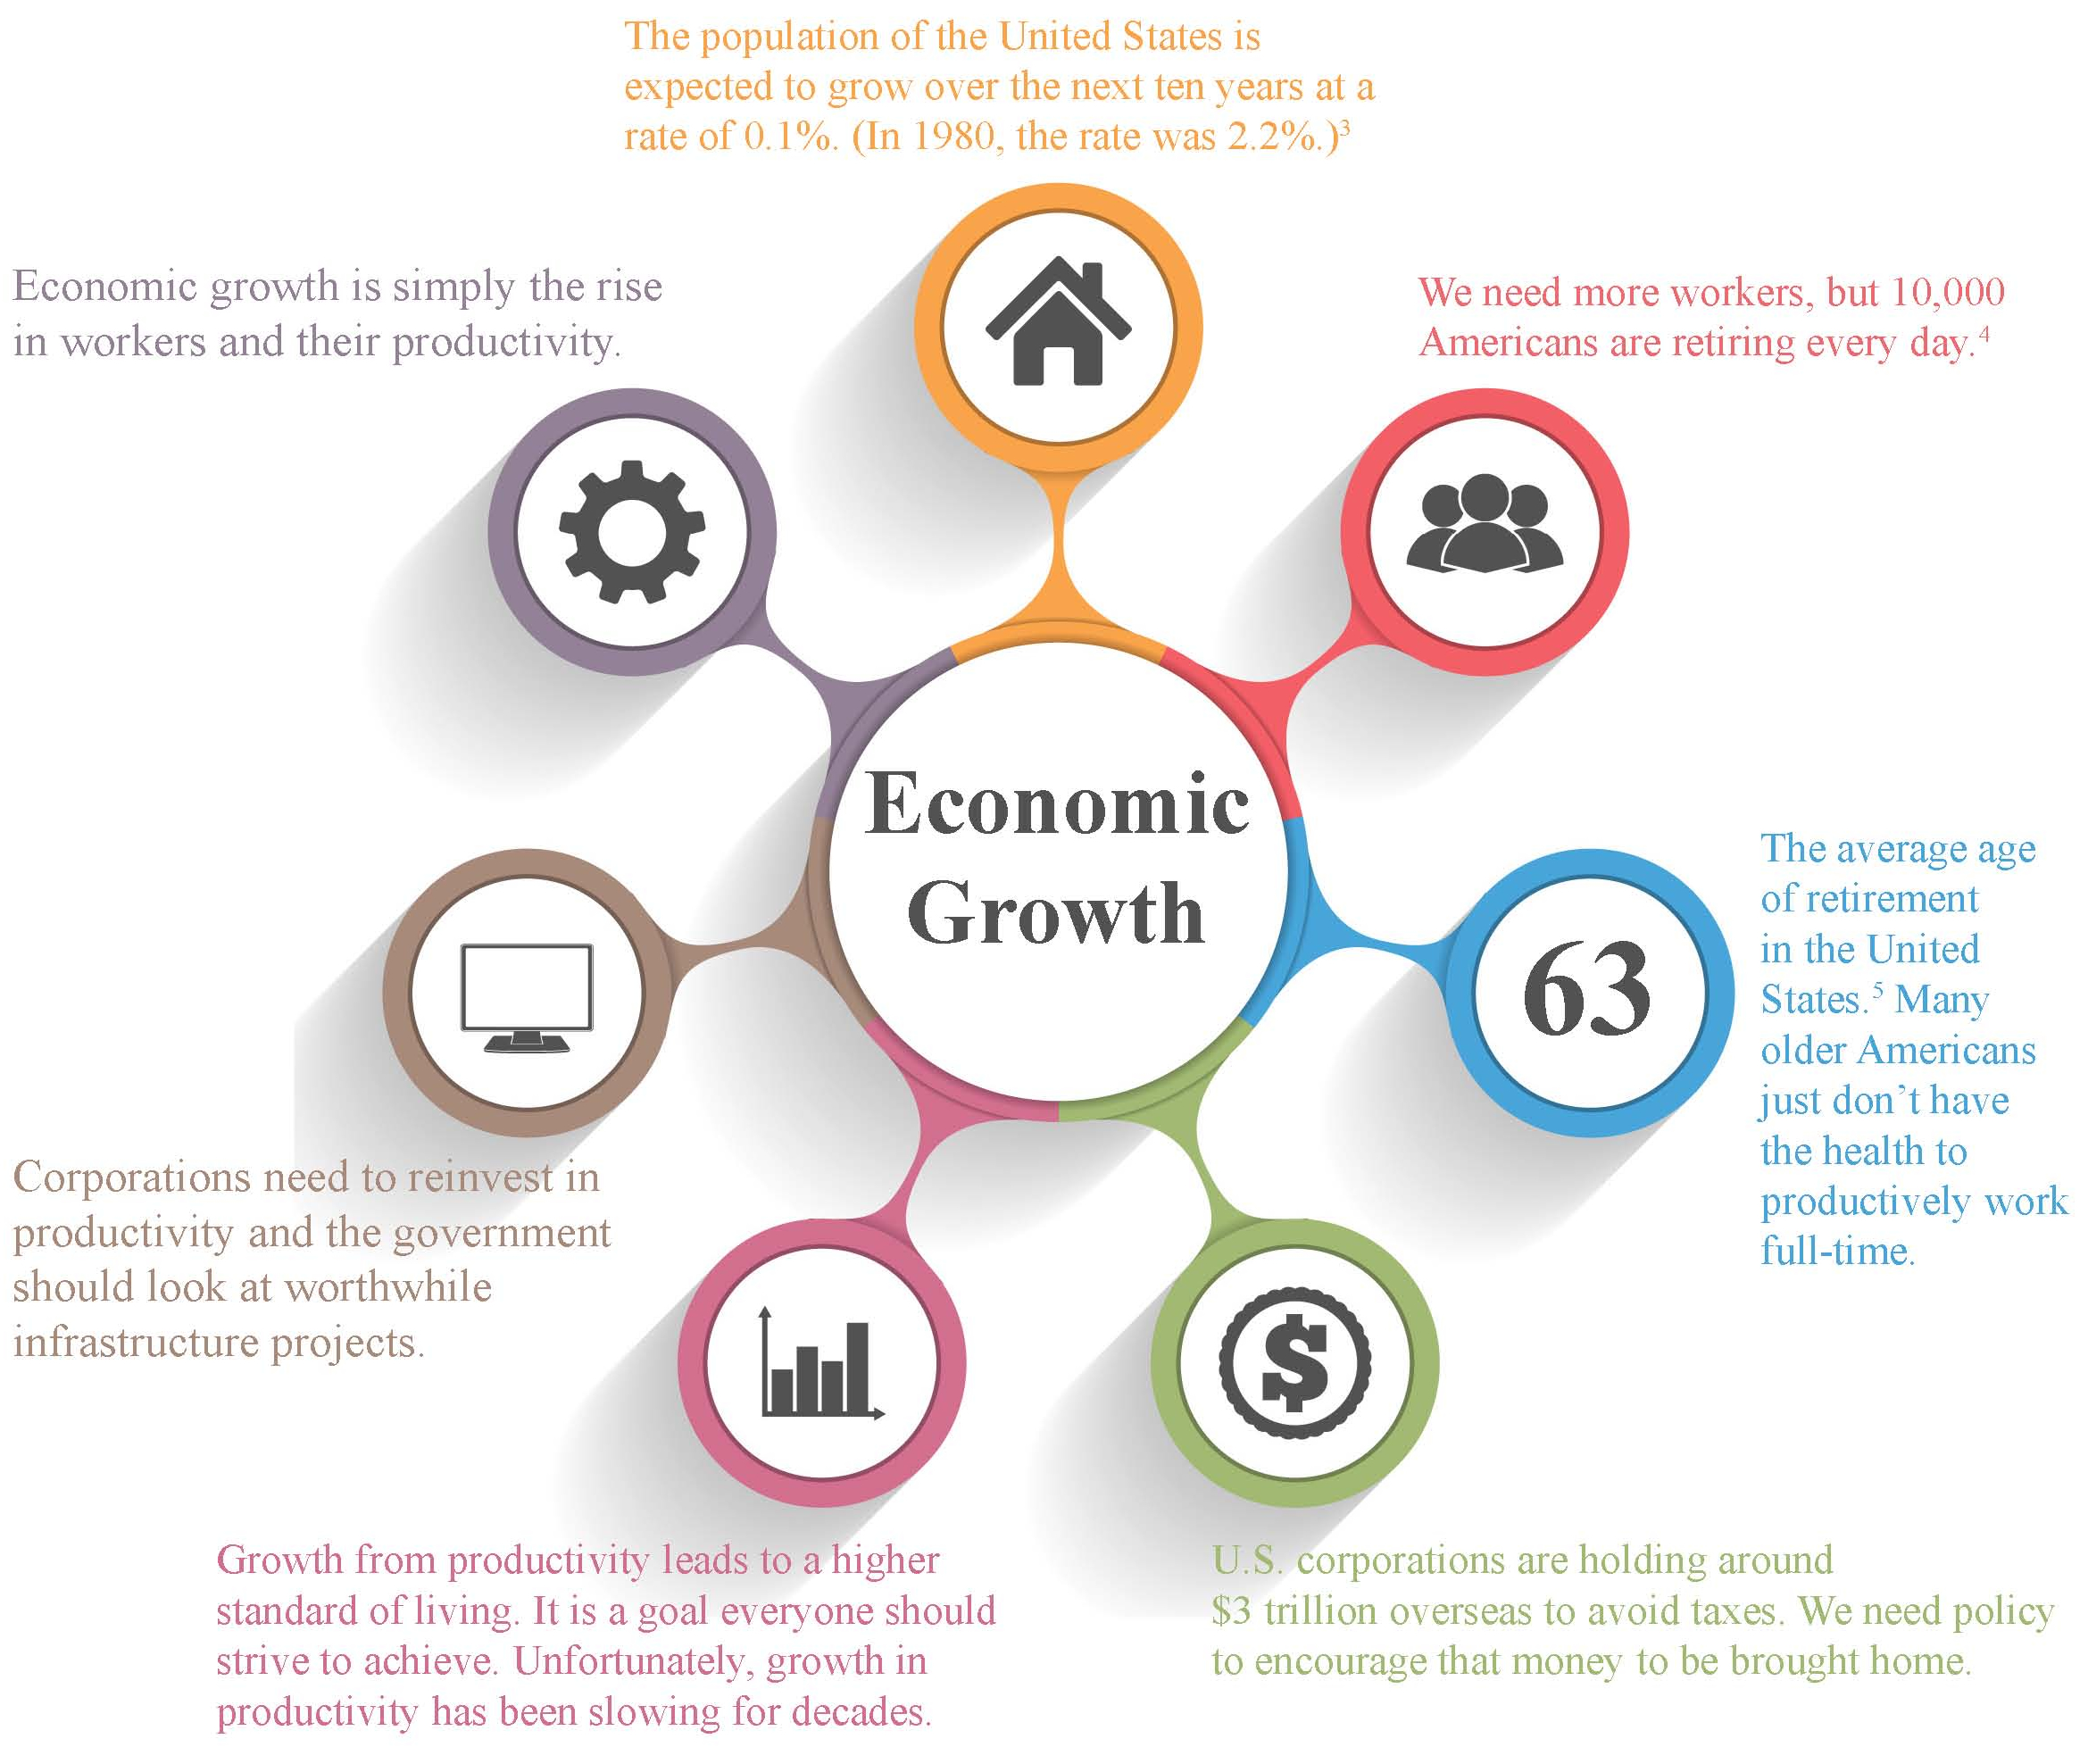 economic growth research topics